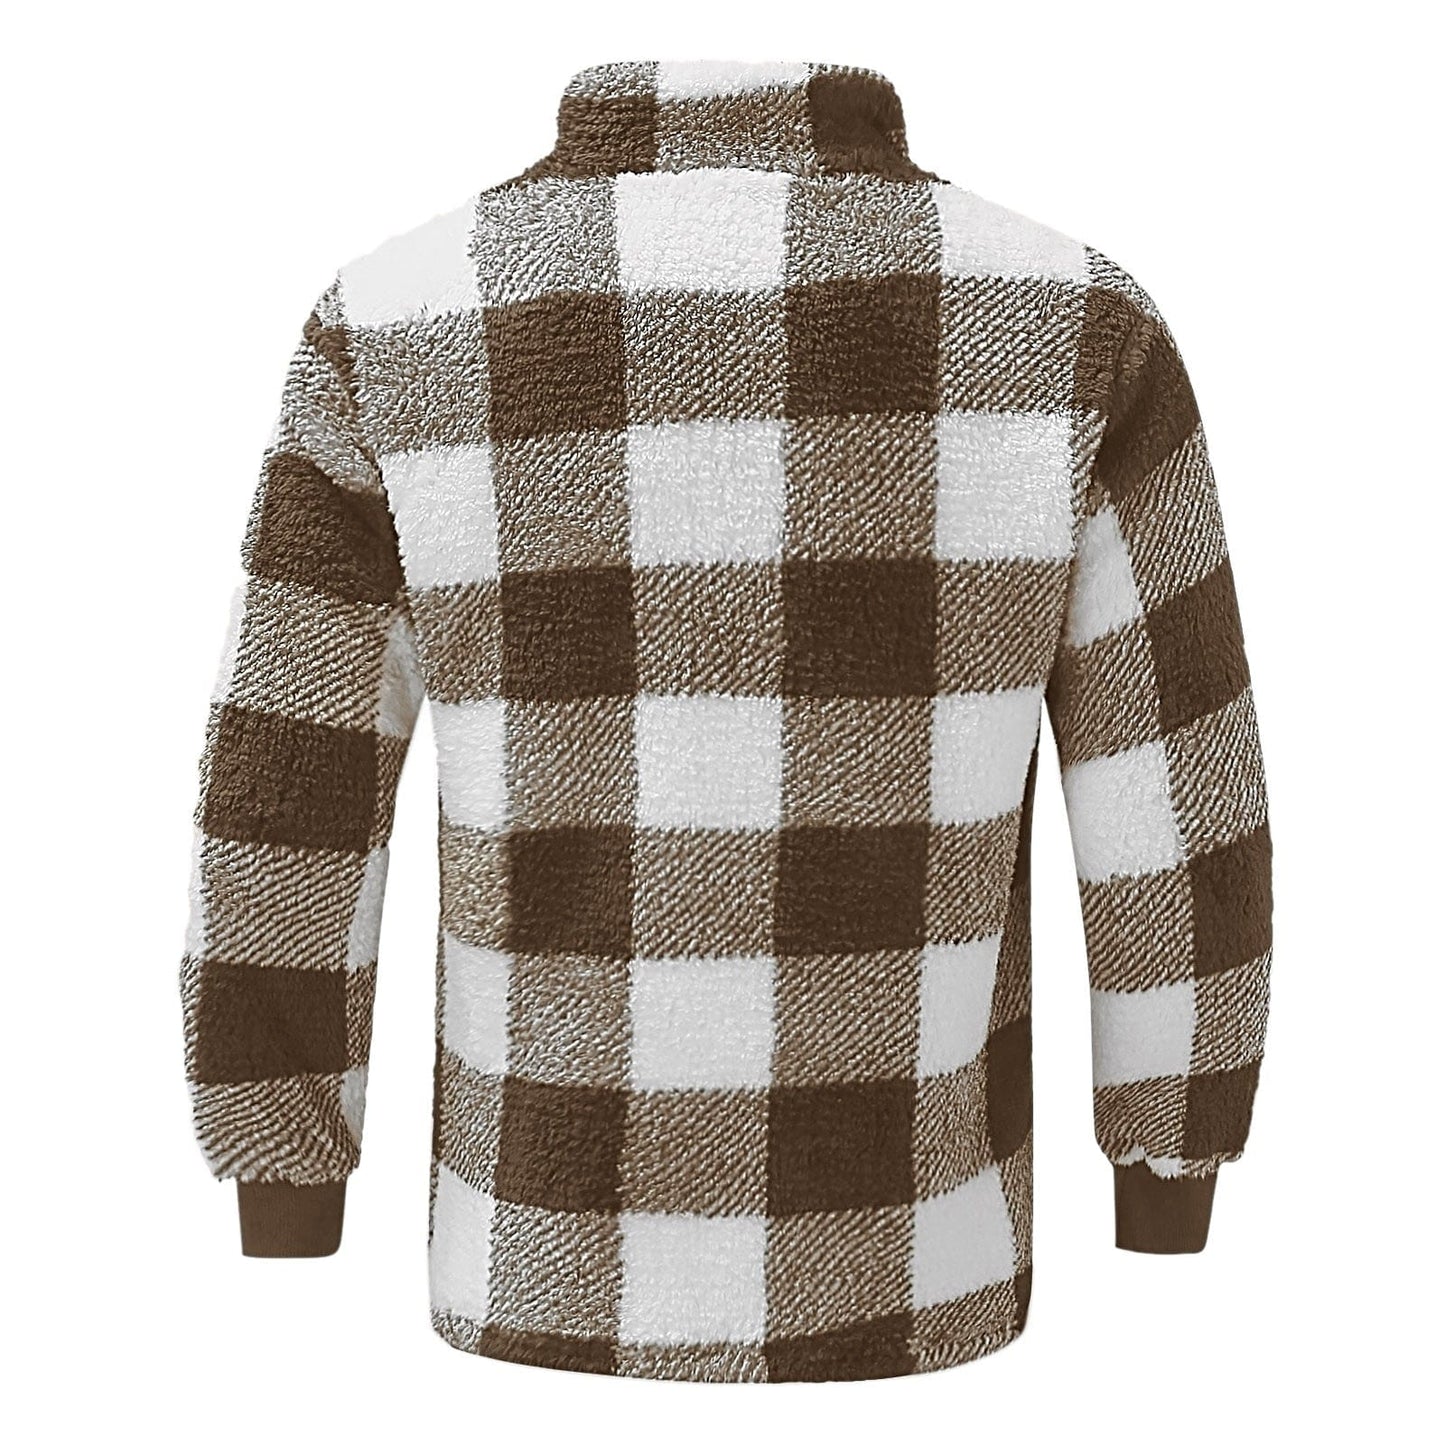 Men's Plaid Plush Sweater Jacket